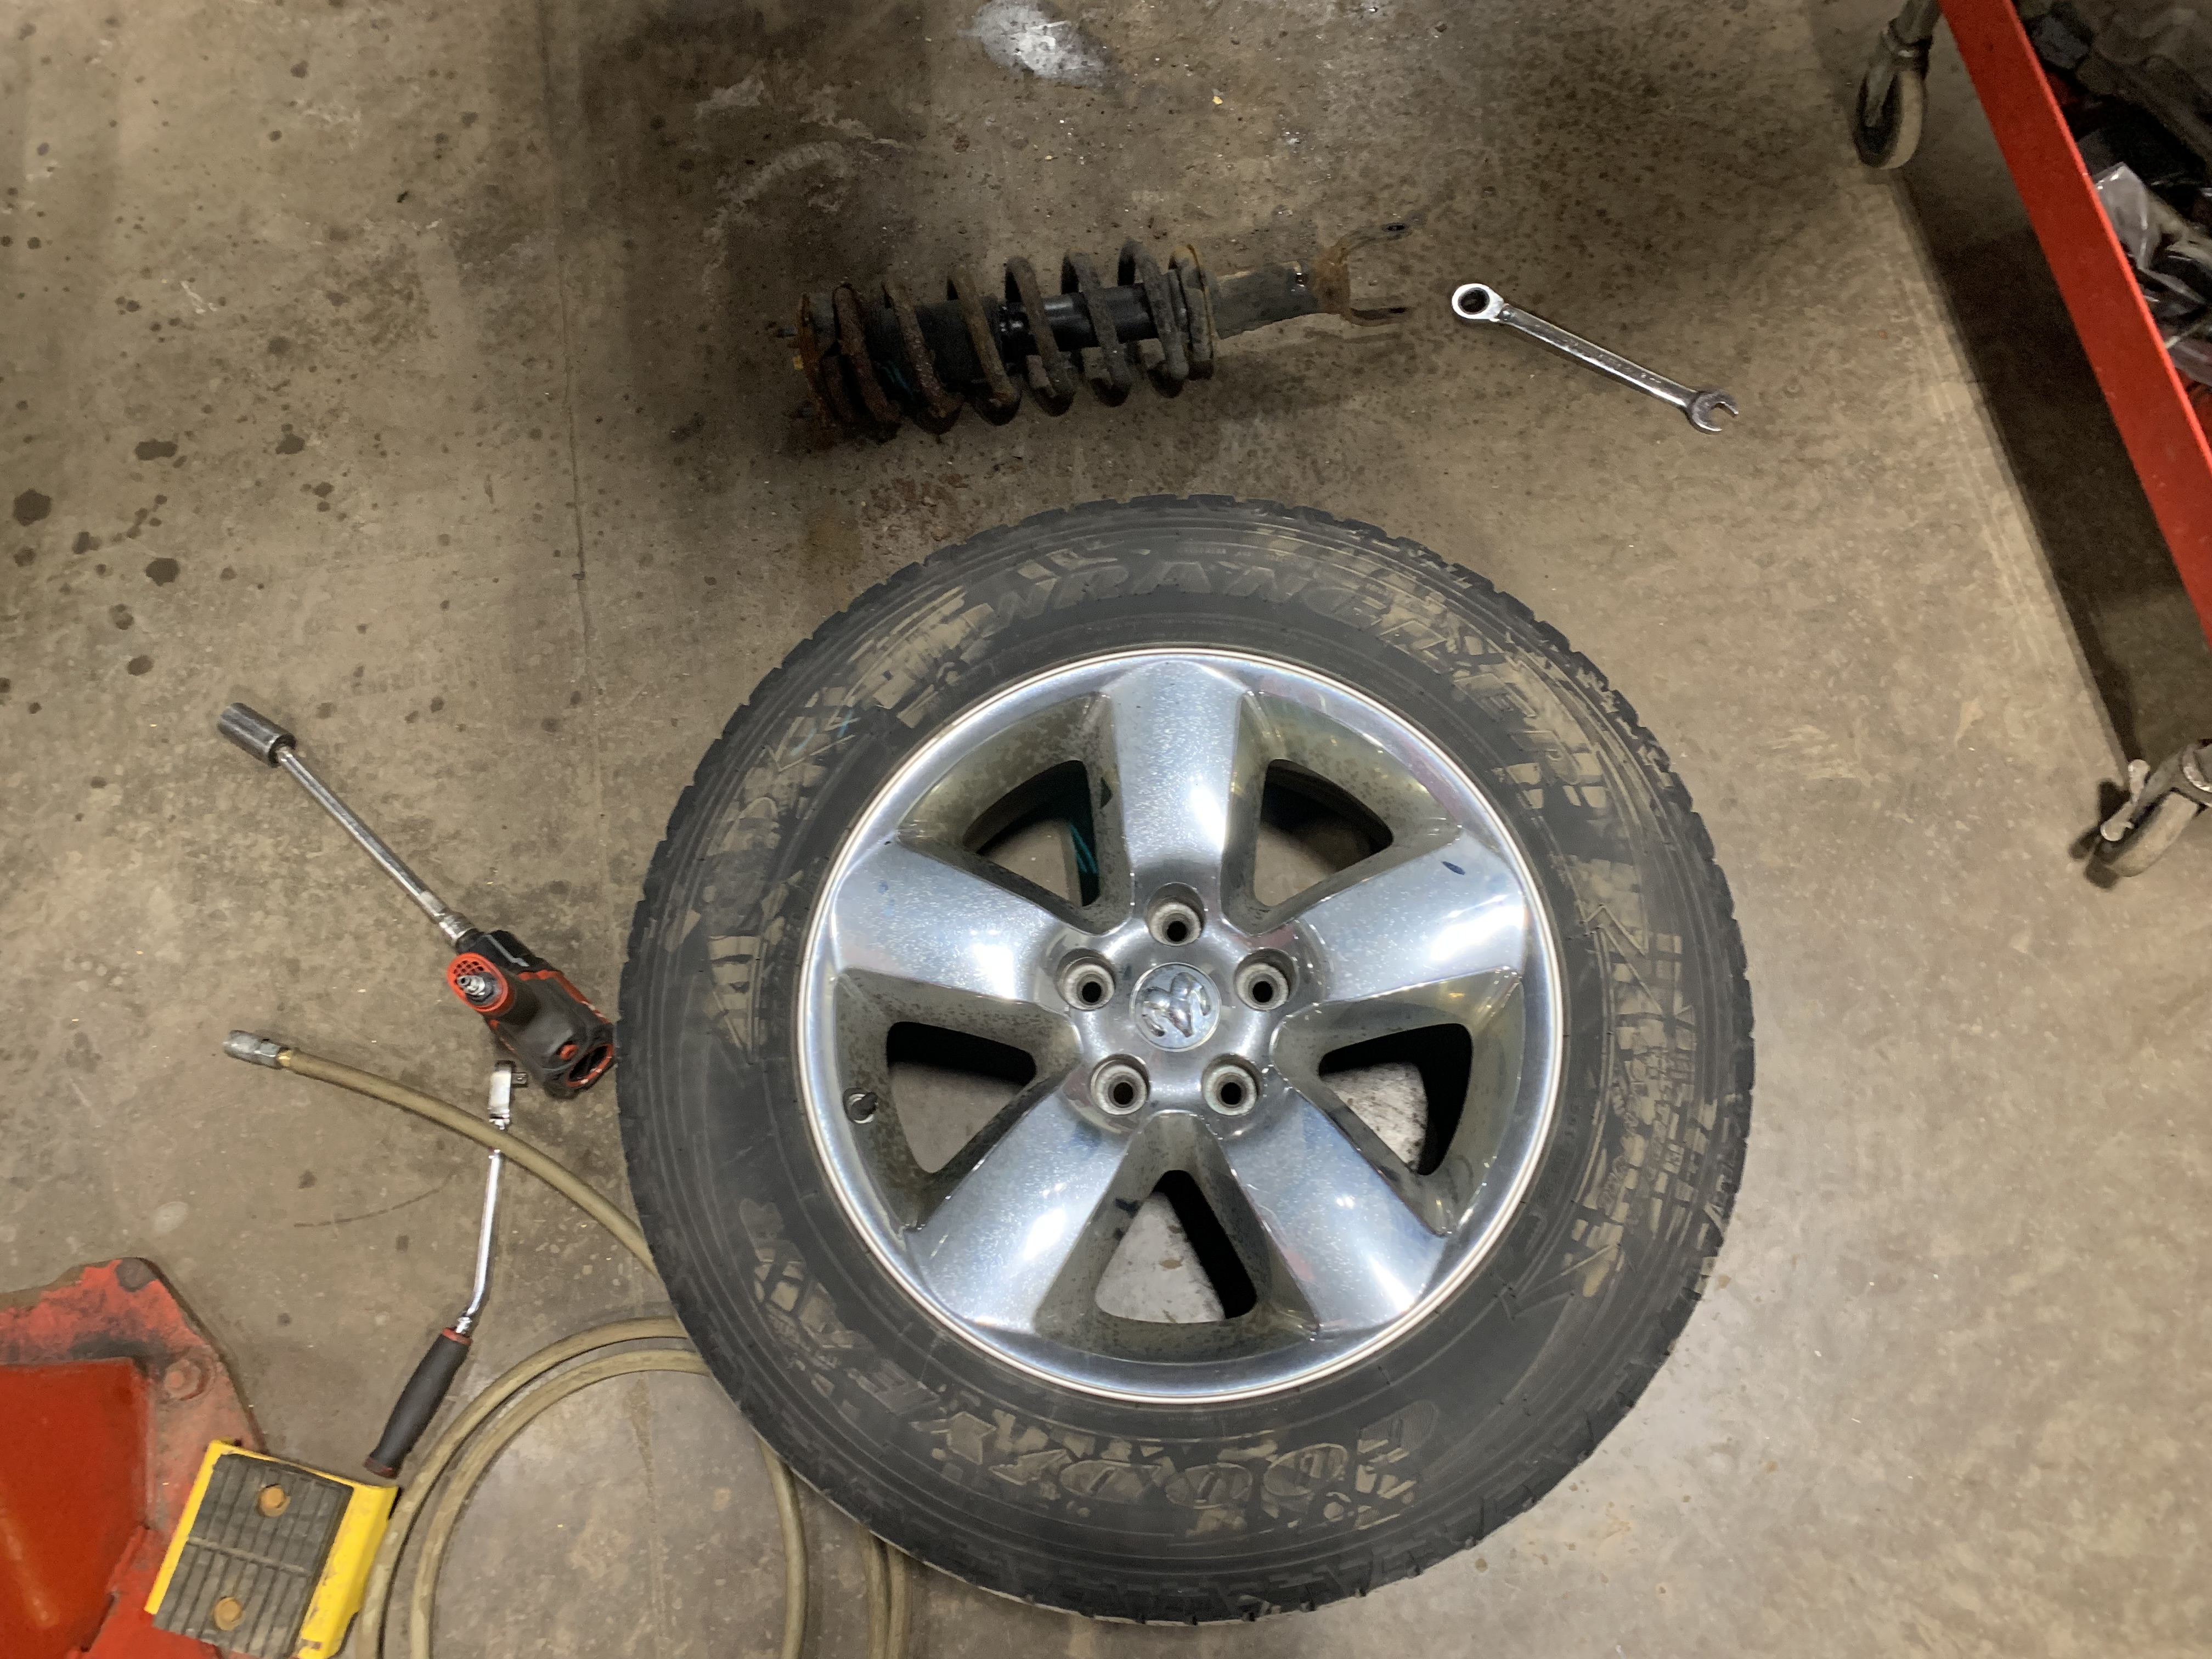 Tire On Shop Floor | Lou's Car Care Center, Inc.